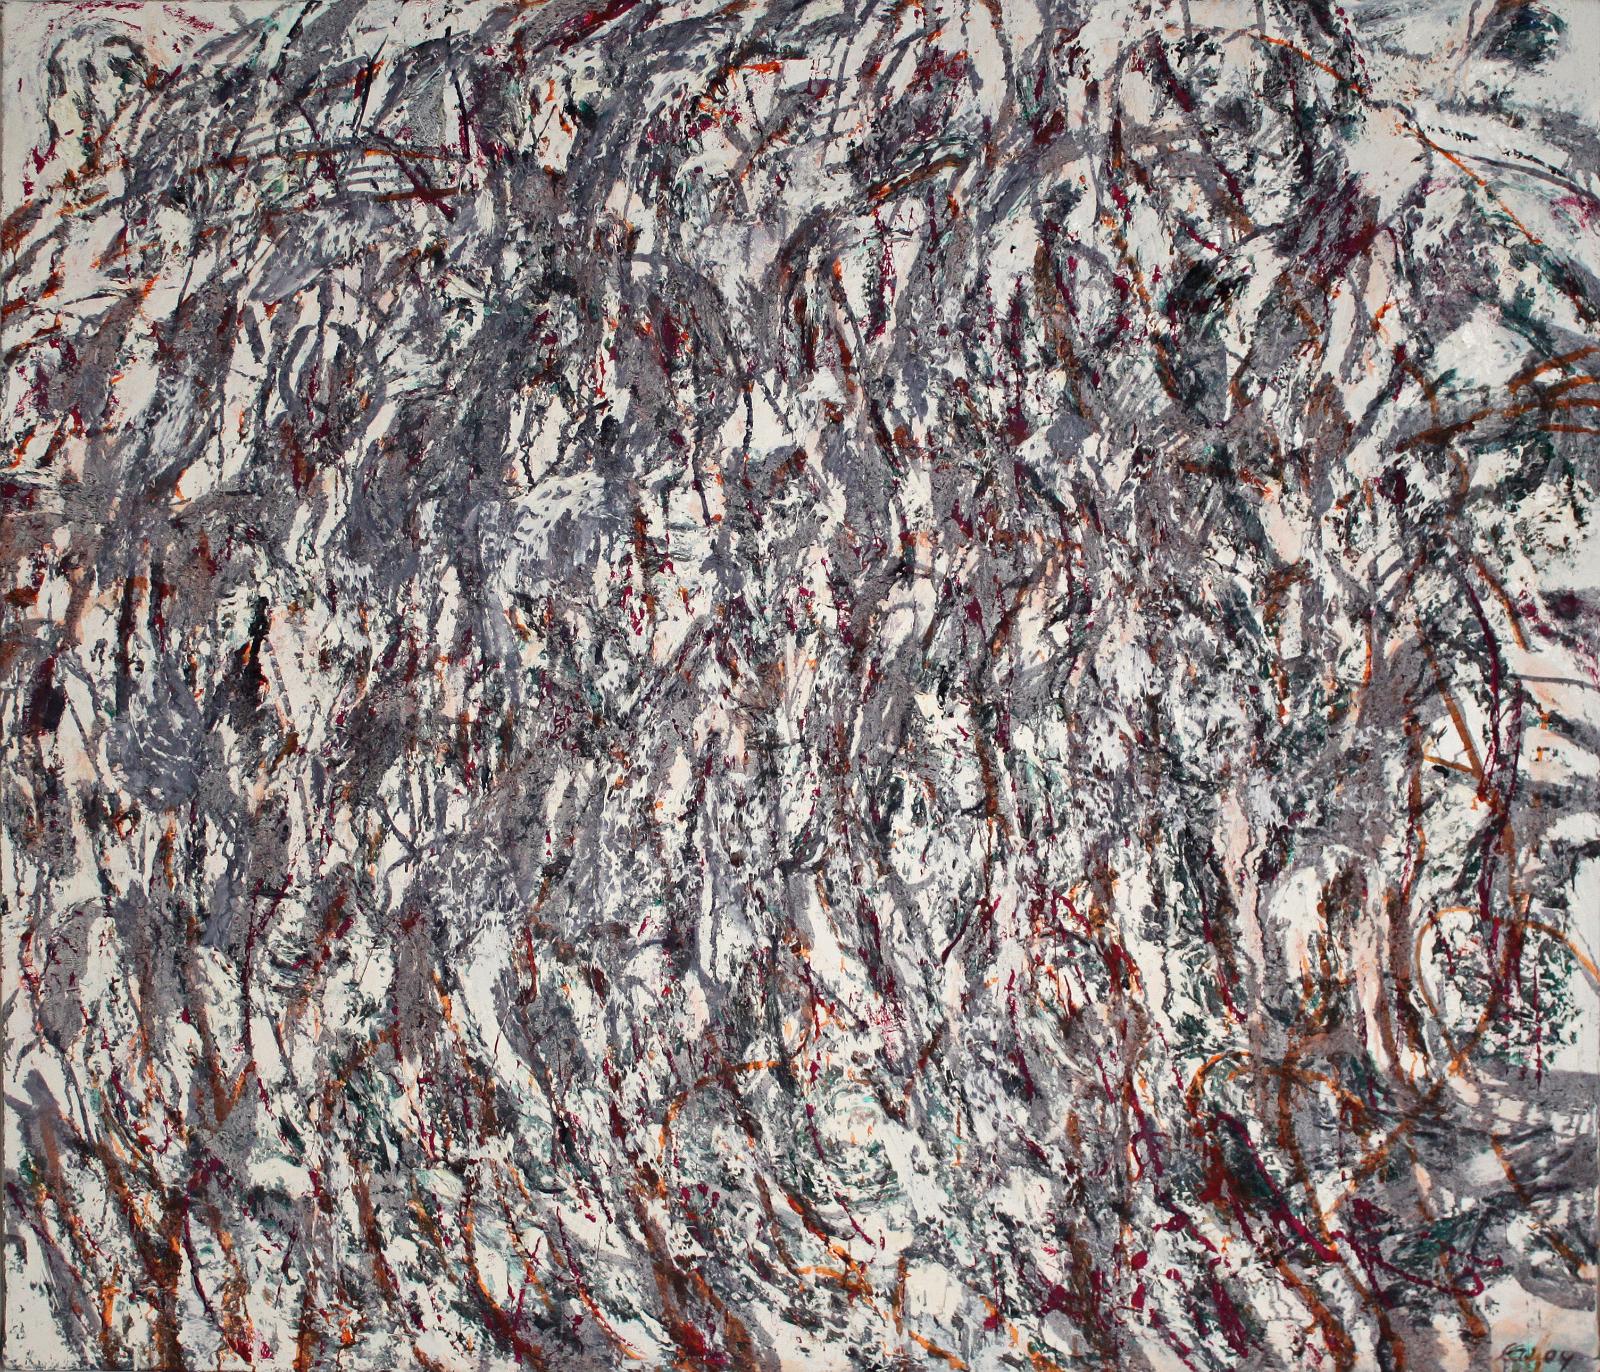 Elke Wree, Asturia, 2004, Öl auf Leinwand, 130 x 150 cm, Preis auf Anfrage